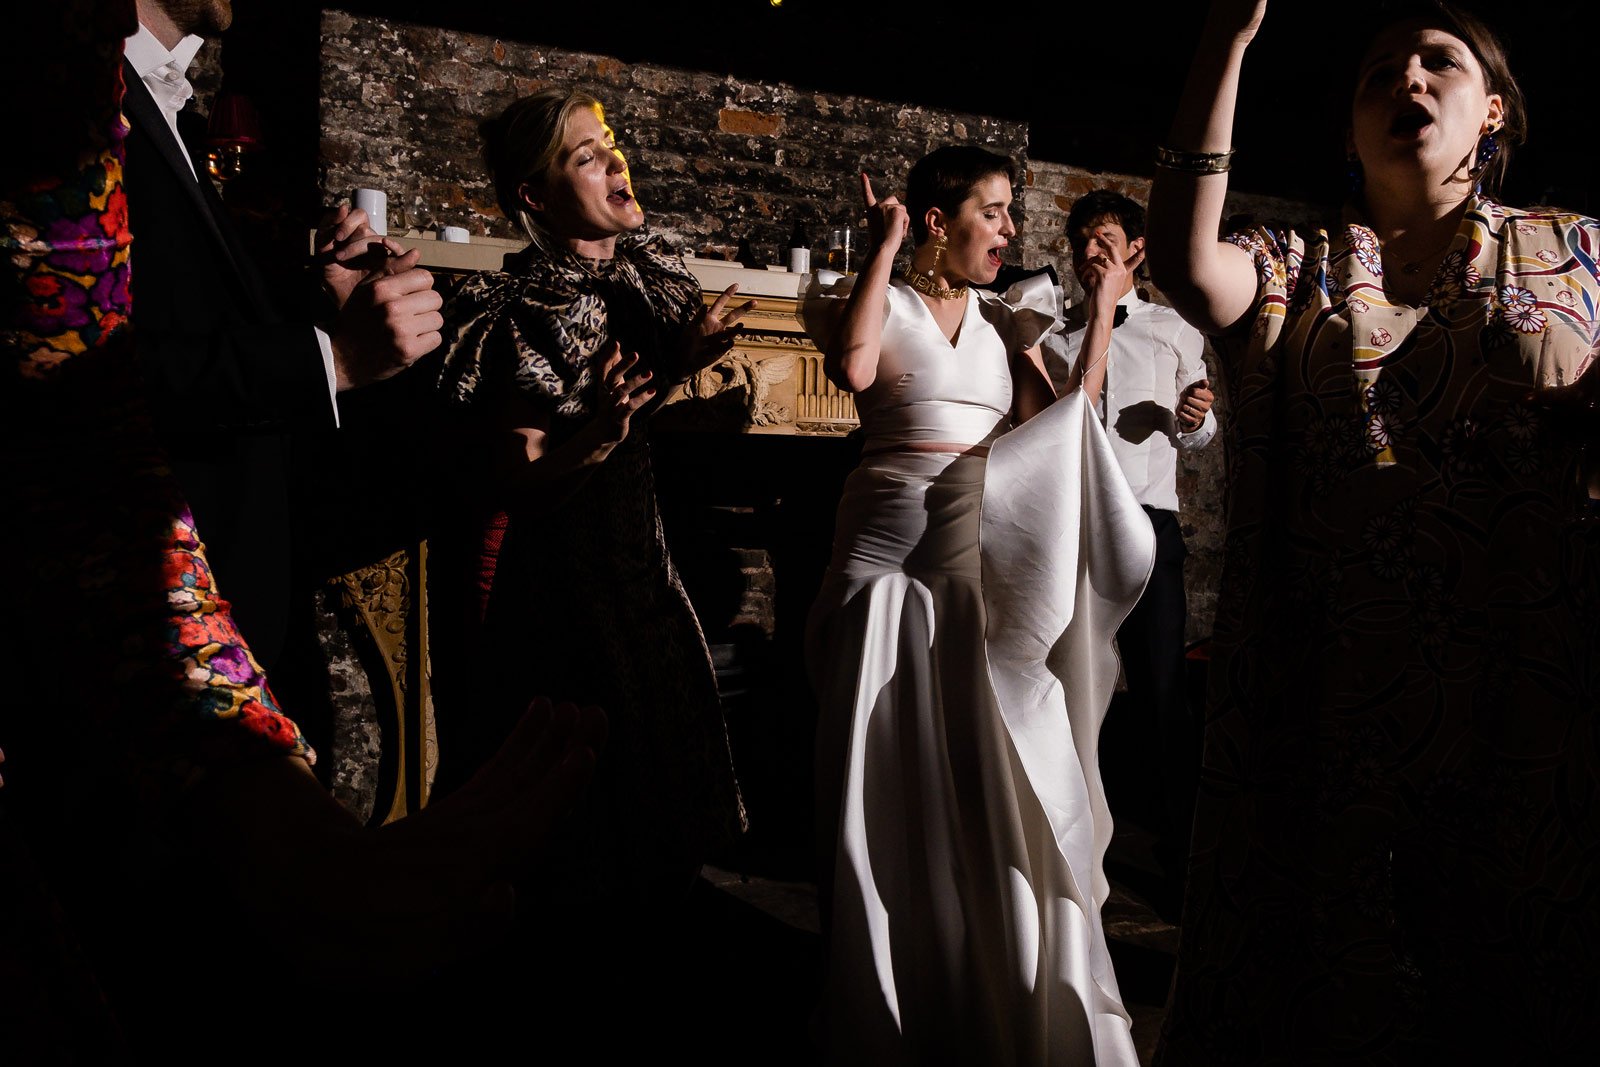 brunswick-house-wedding-dancing-4.jpg